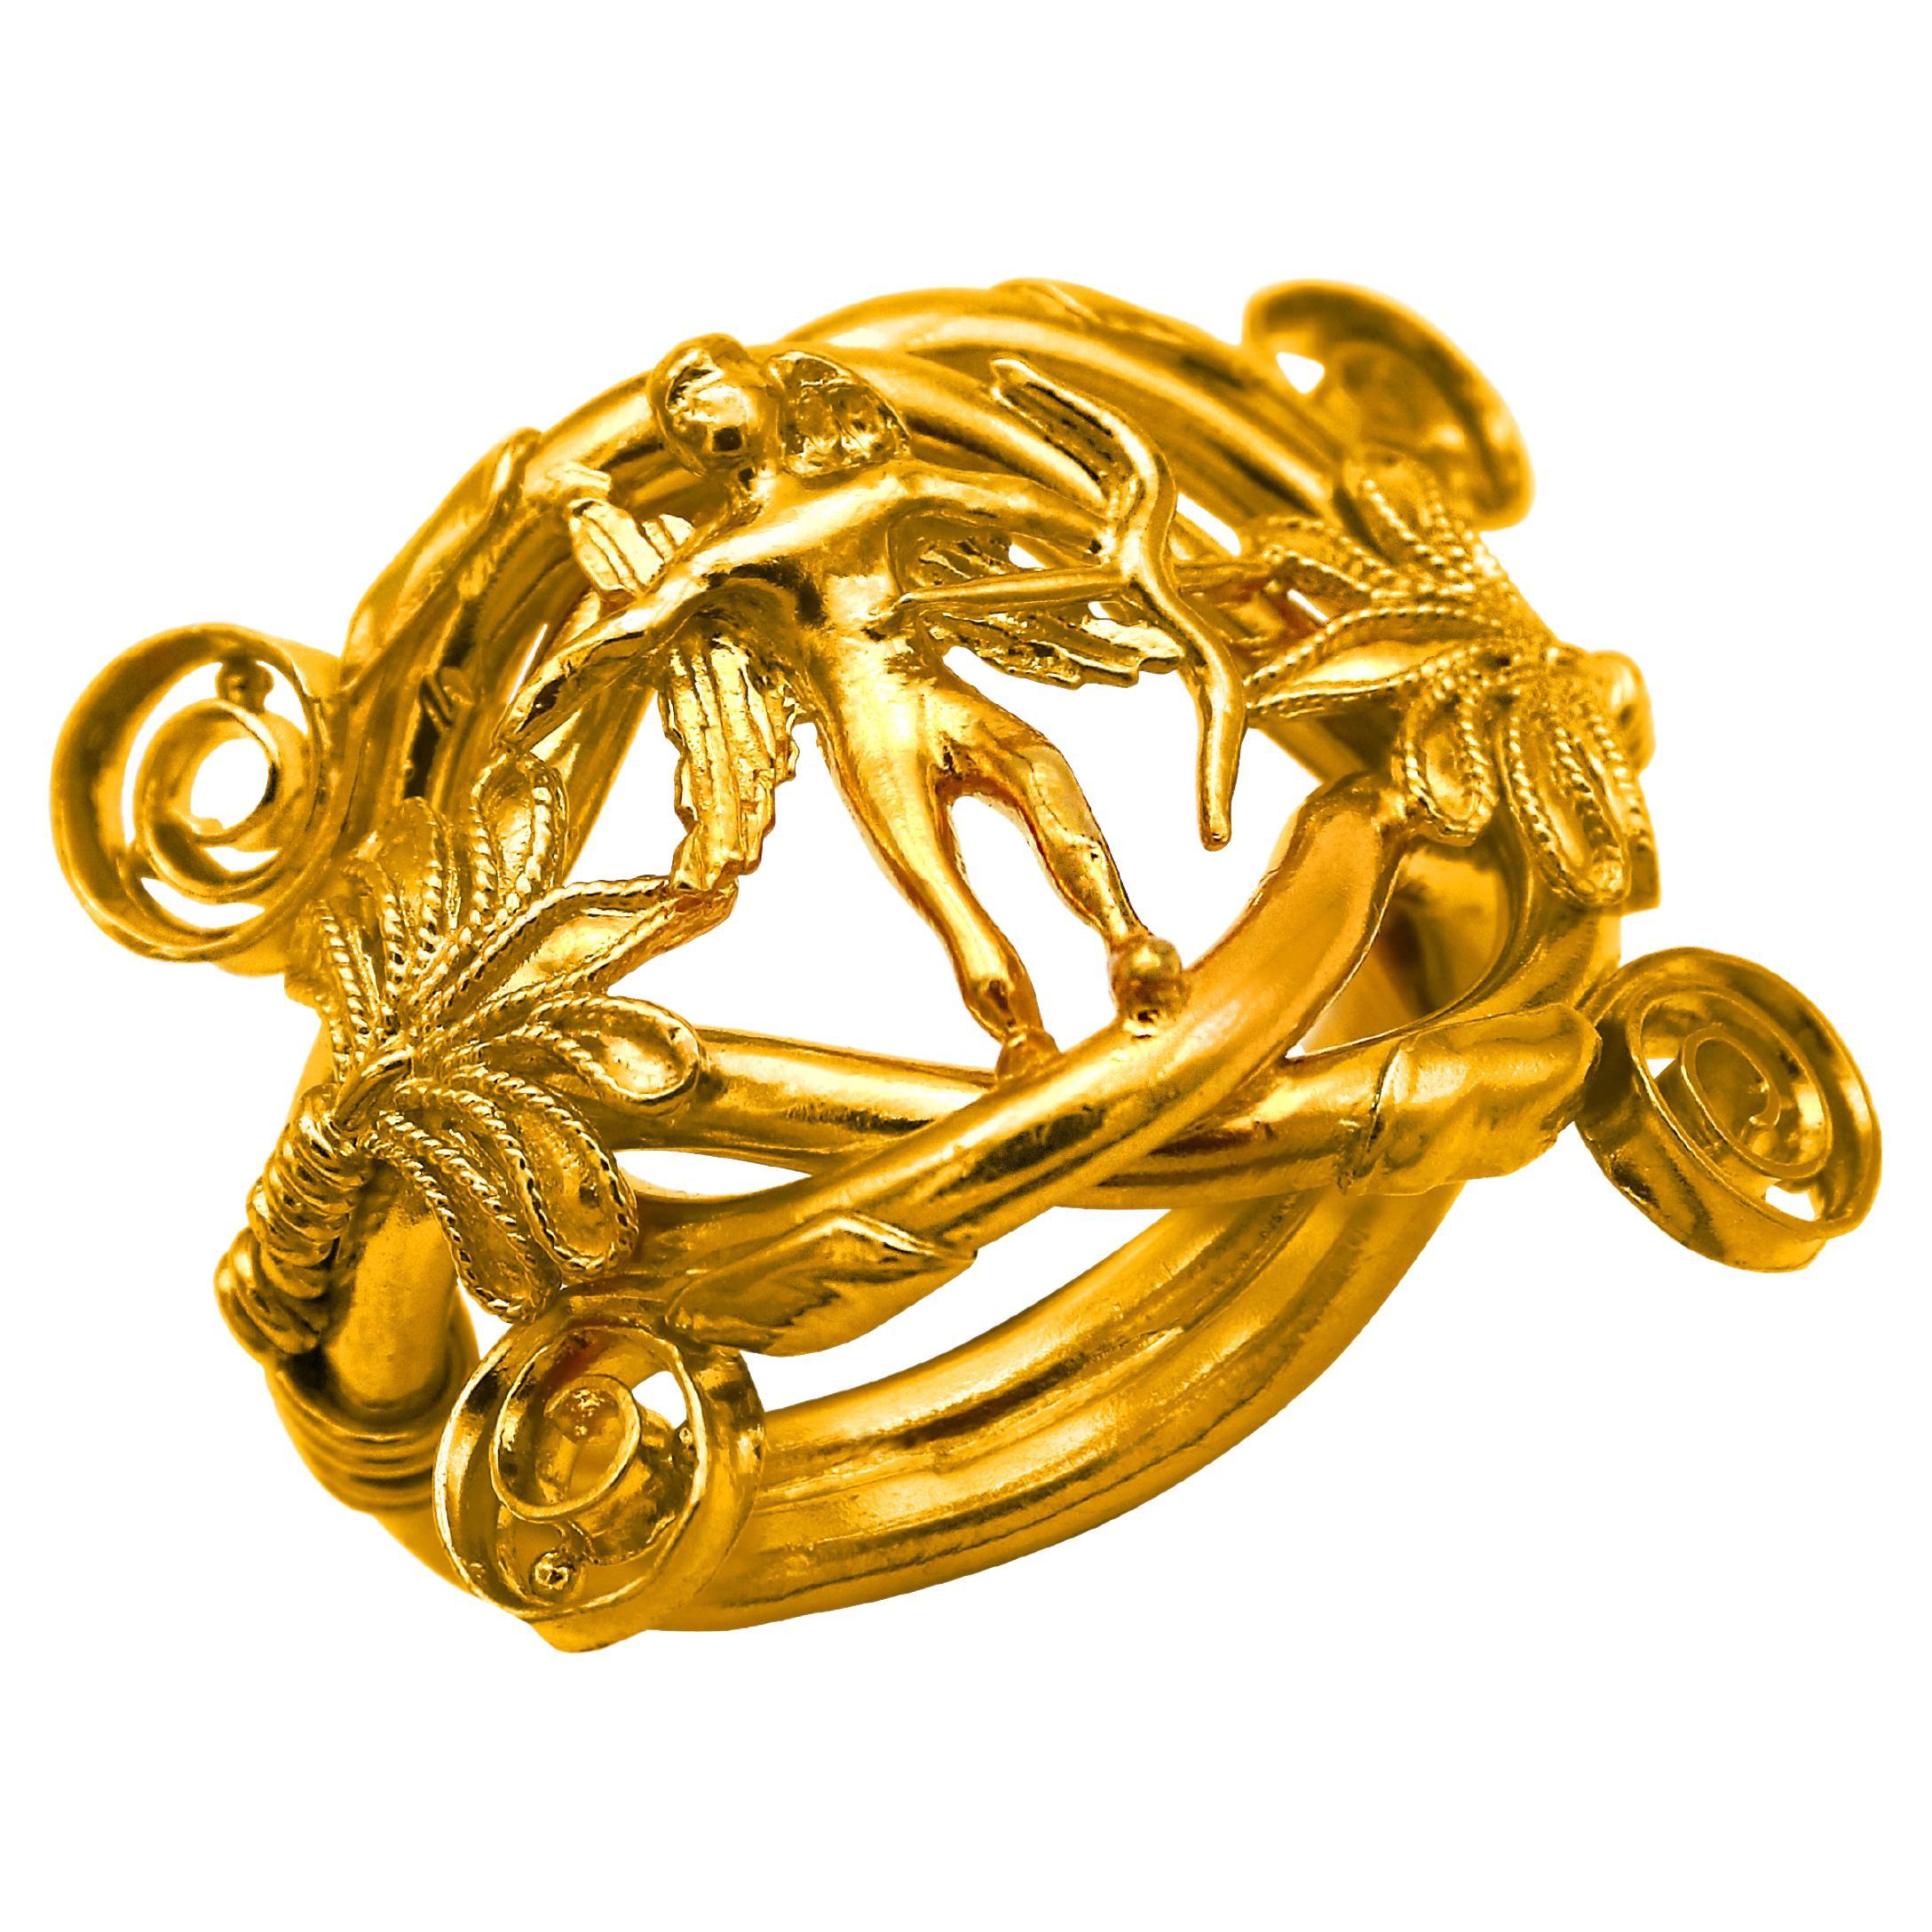 Dimos 22k Gold Ancient Greek God of Love "Eros" Ring